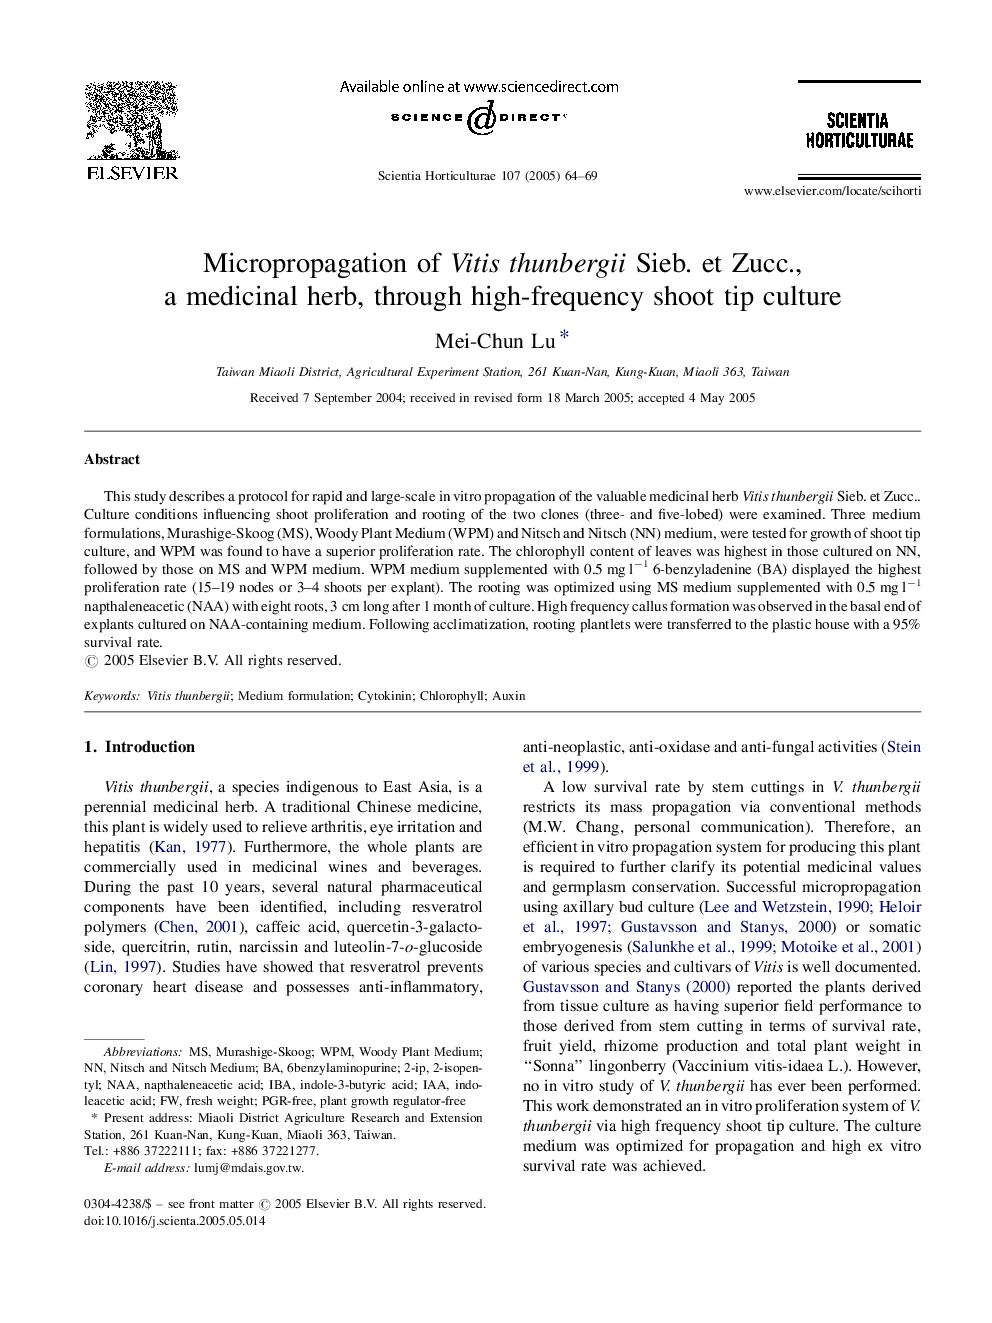 Micropropagation of Vitis thunbergii Sieb. et Zucc., a medicinal herb, through high-frequency shoot tip culture